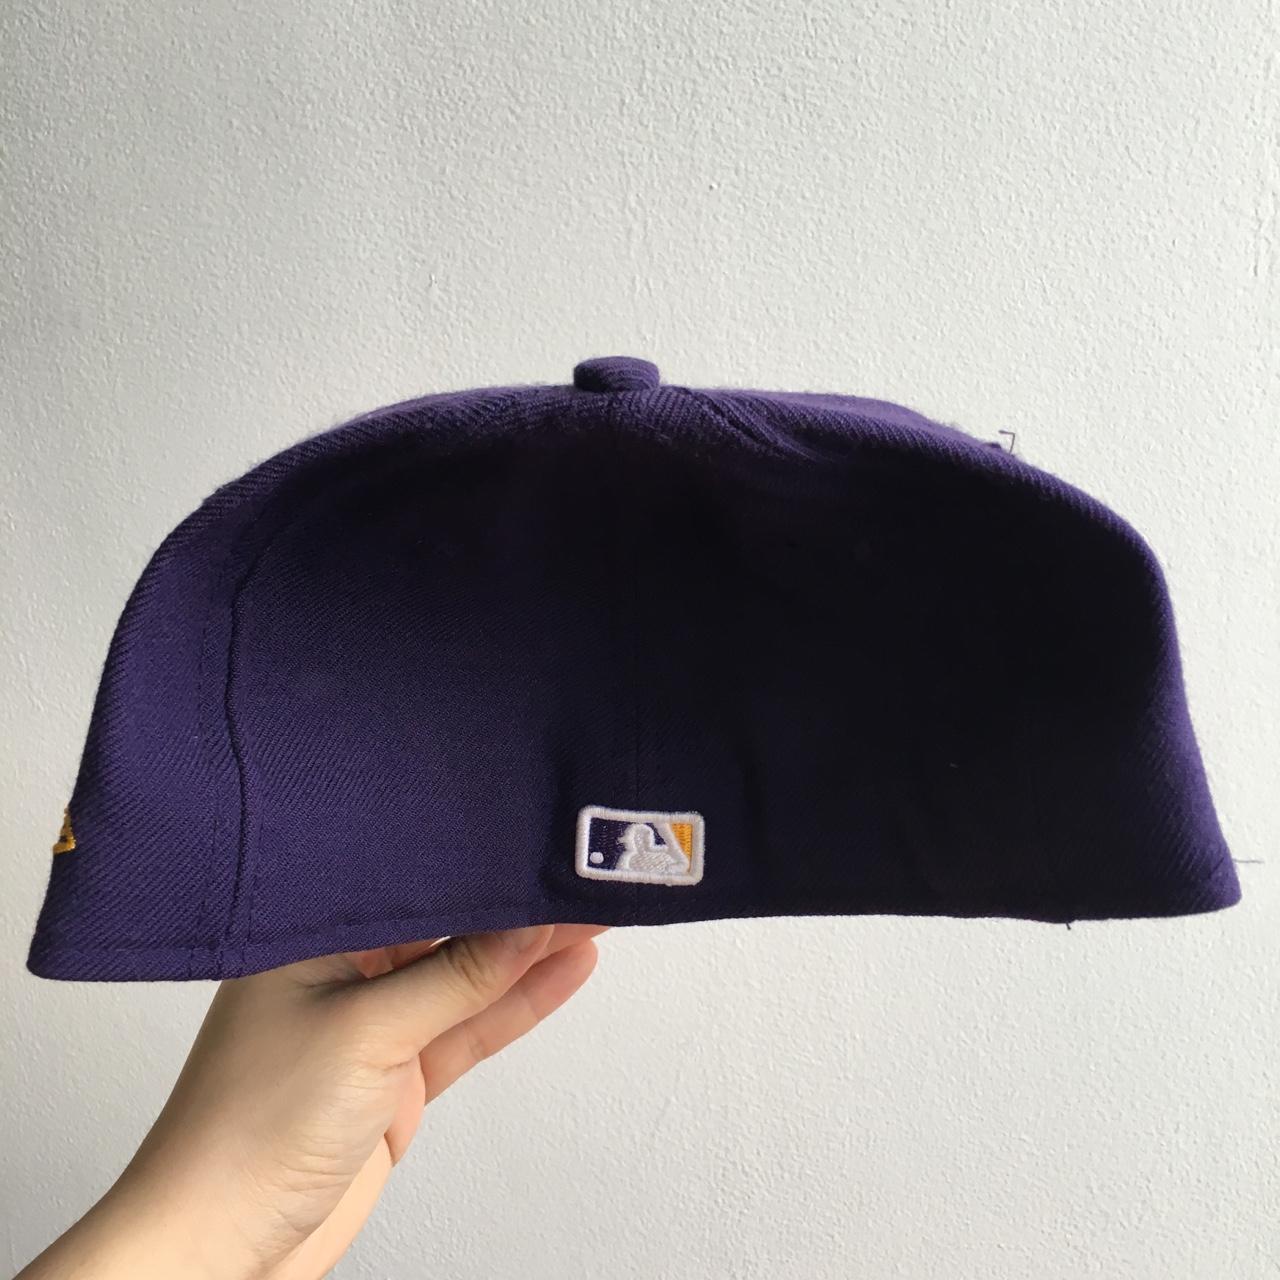 New 7 5/8 LA Dodgers 5amrosa custom hat 2020. Never - Depop